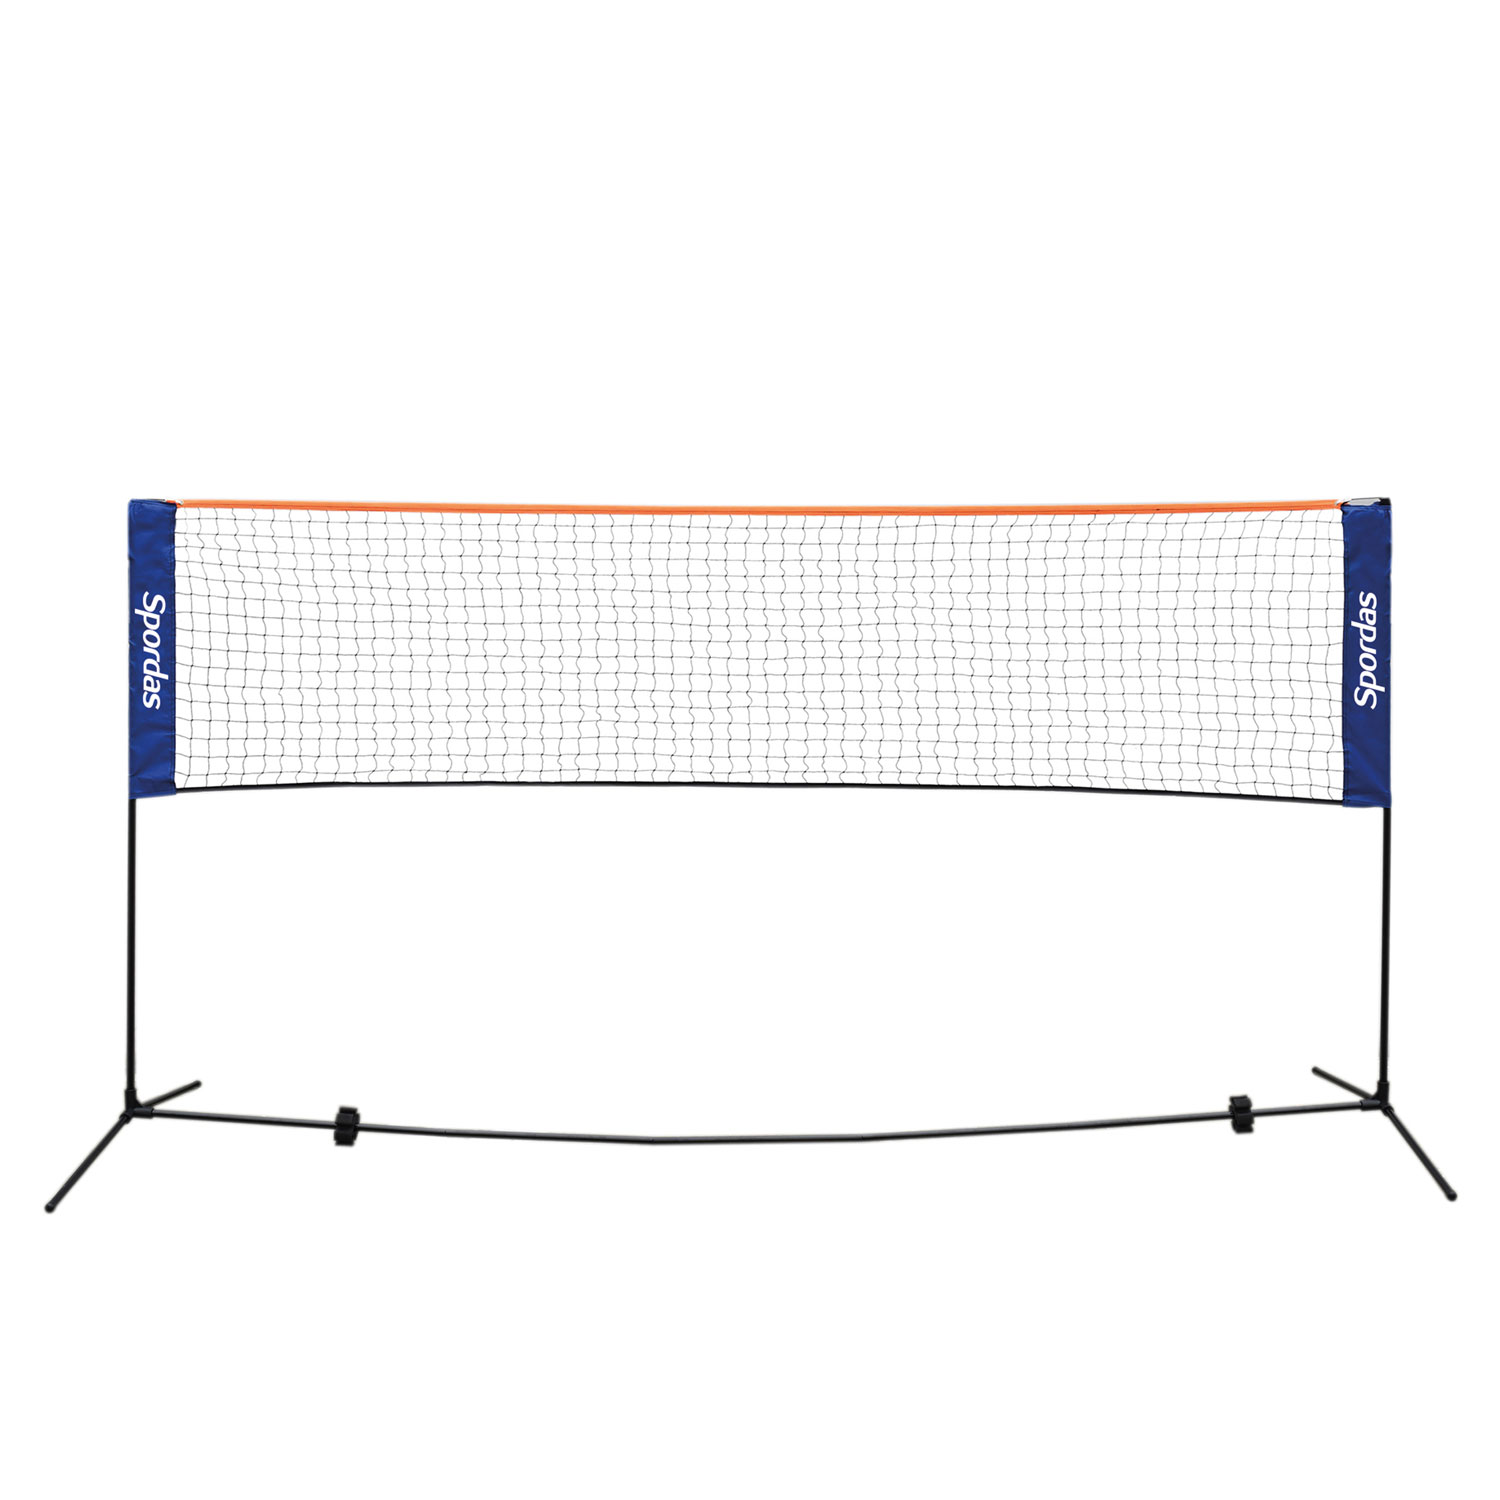 Spordas Badminton Netz